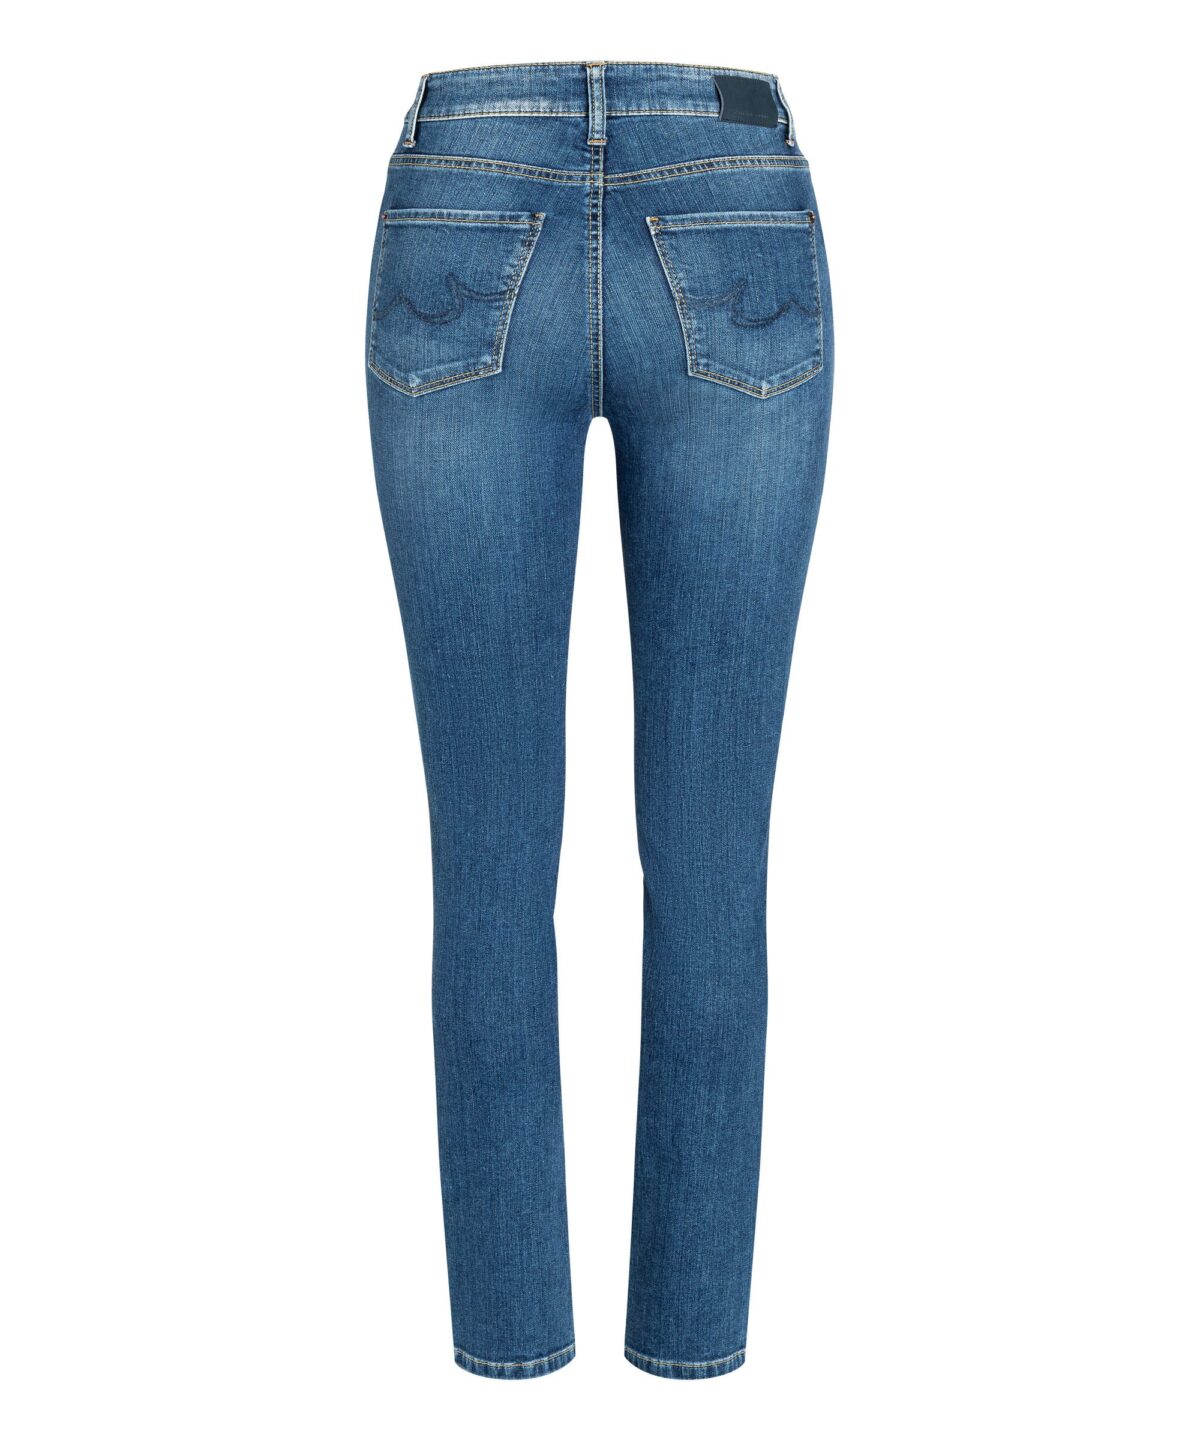 Cambio jeans Parla straight lys denim 1